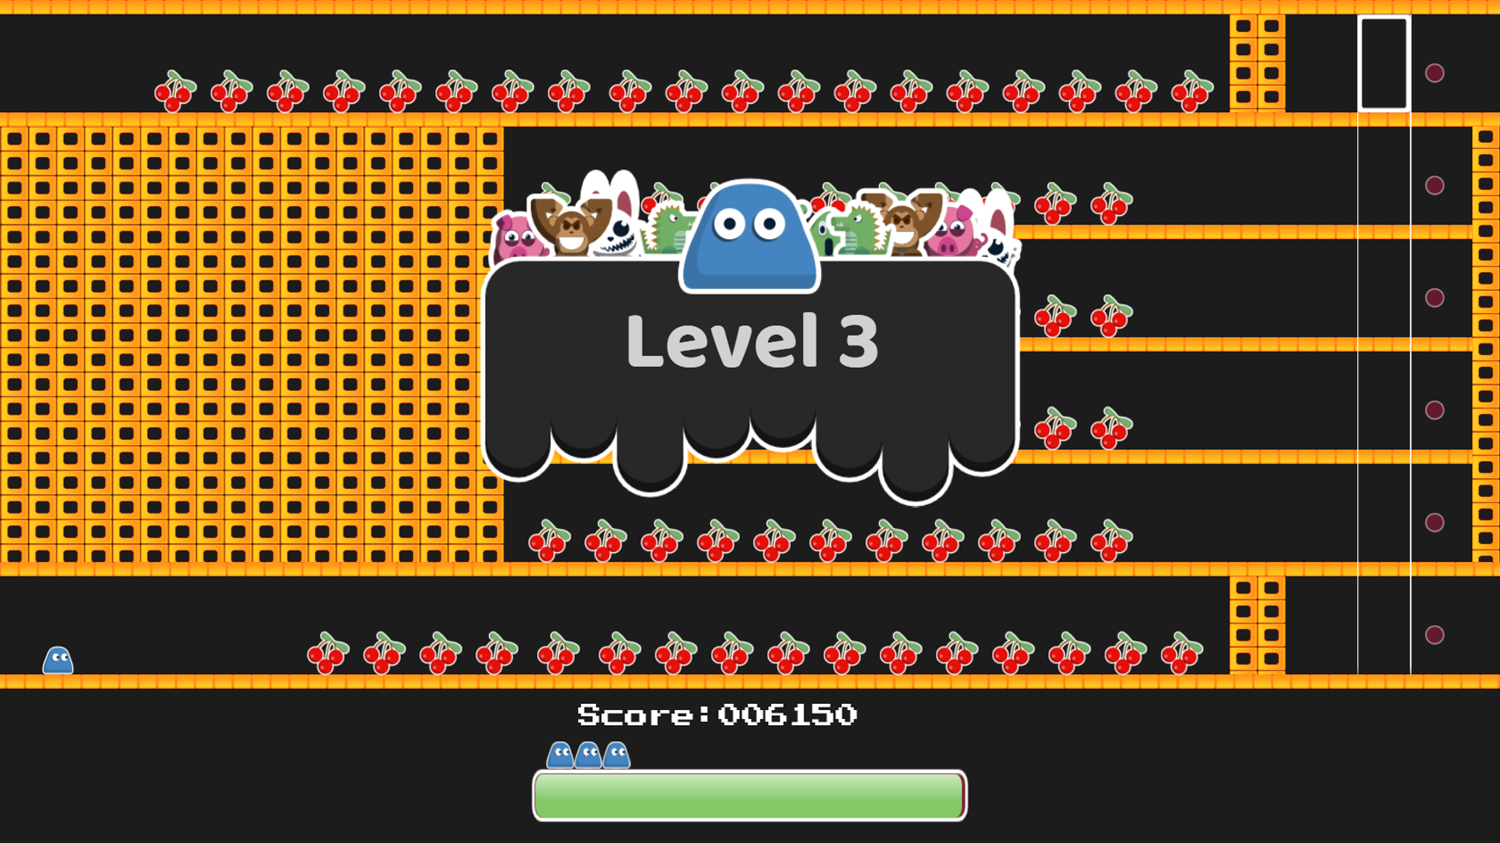 Escape Jelly Platformer Game Level Progress Screenshot.